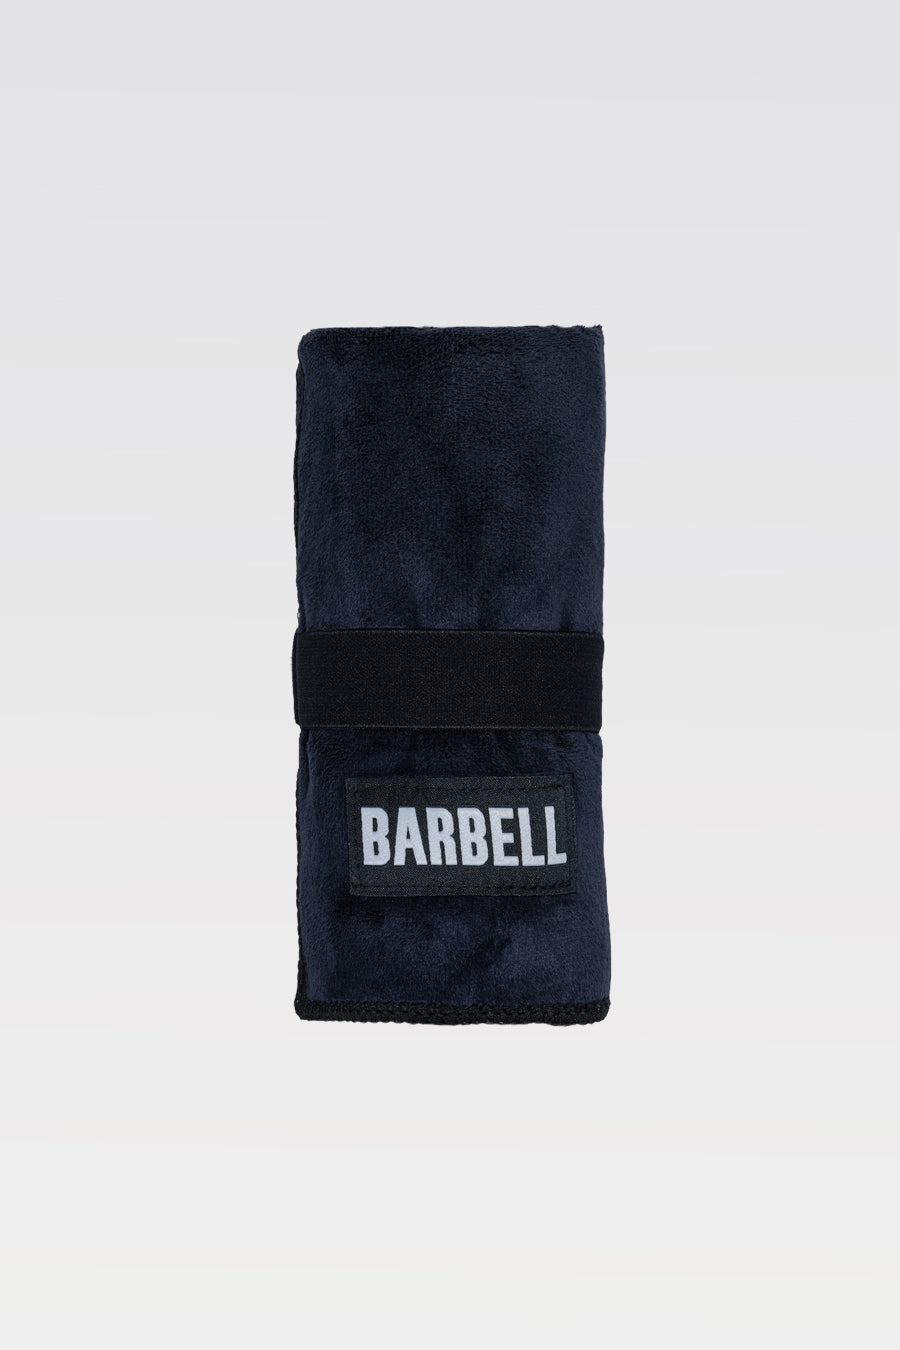 Barbell Gym Towel